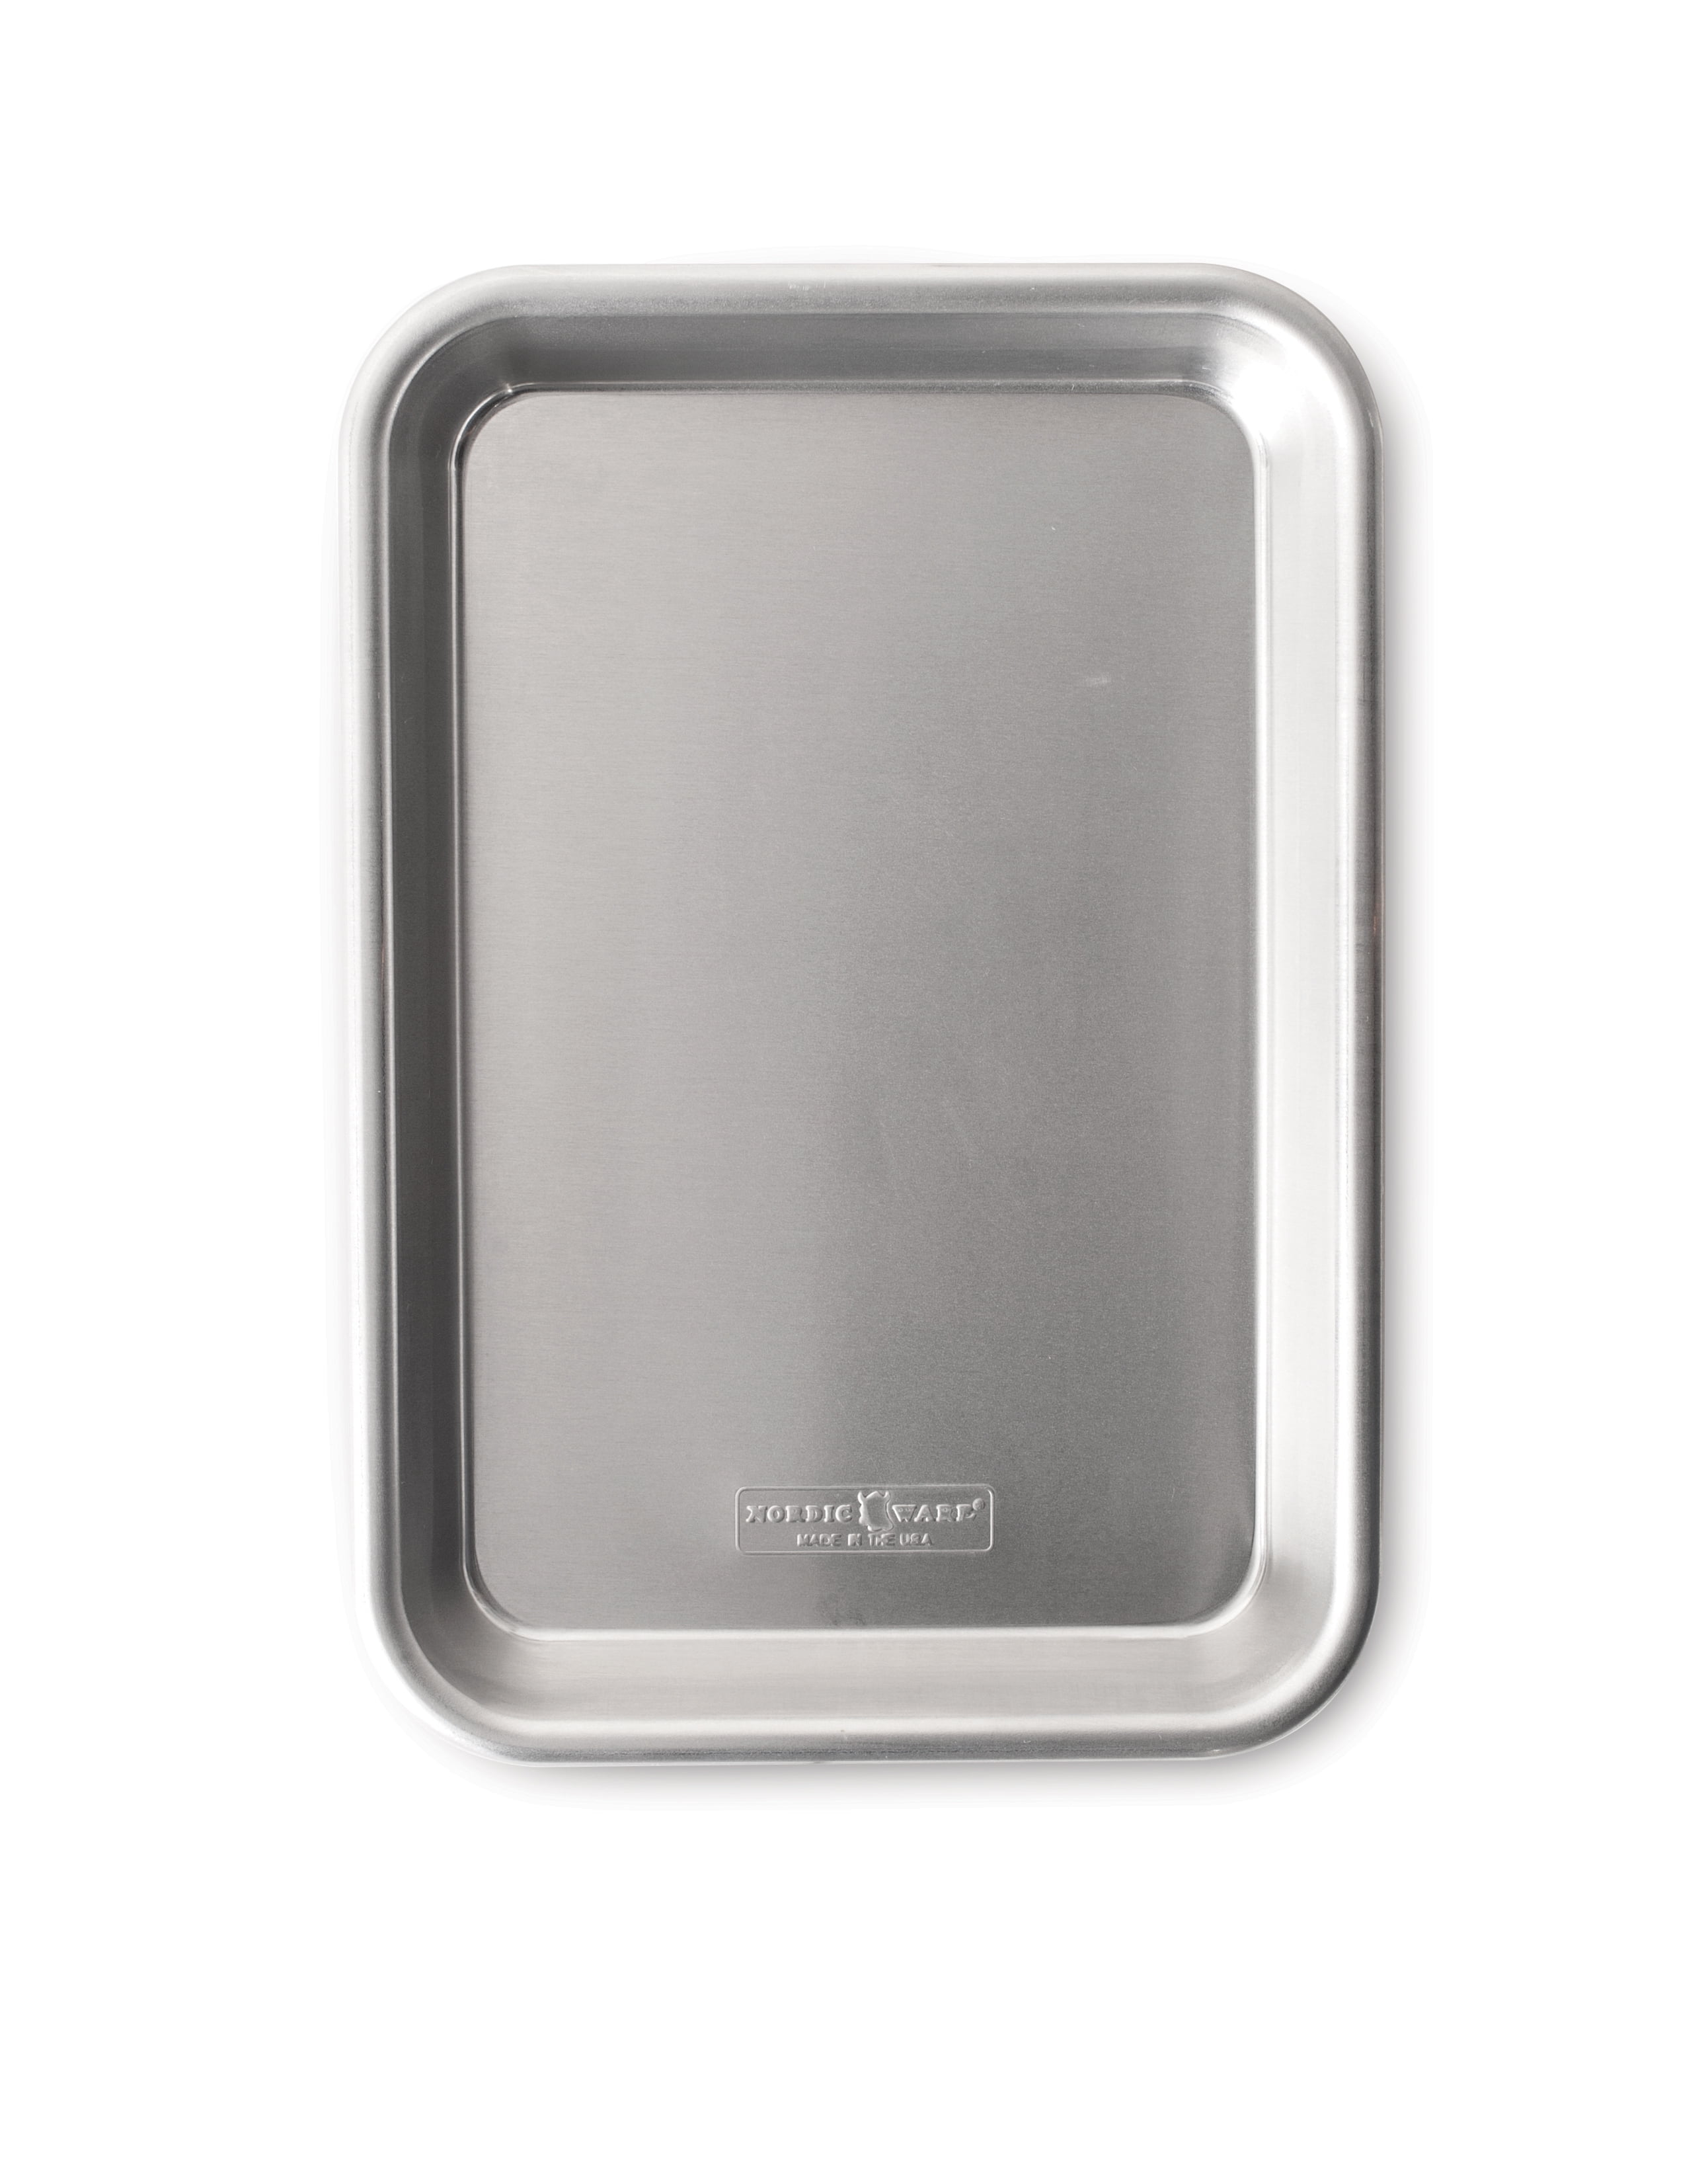 Nordic Ware Naturals Aluminum Eighth Sheet Pan,10.1" x 7" x 1.1", Silver